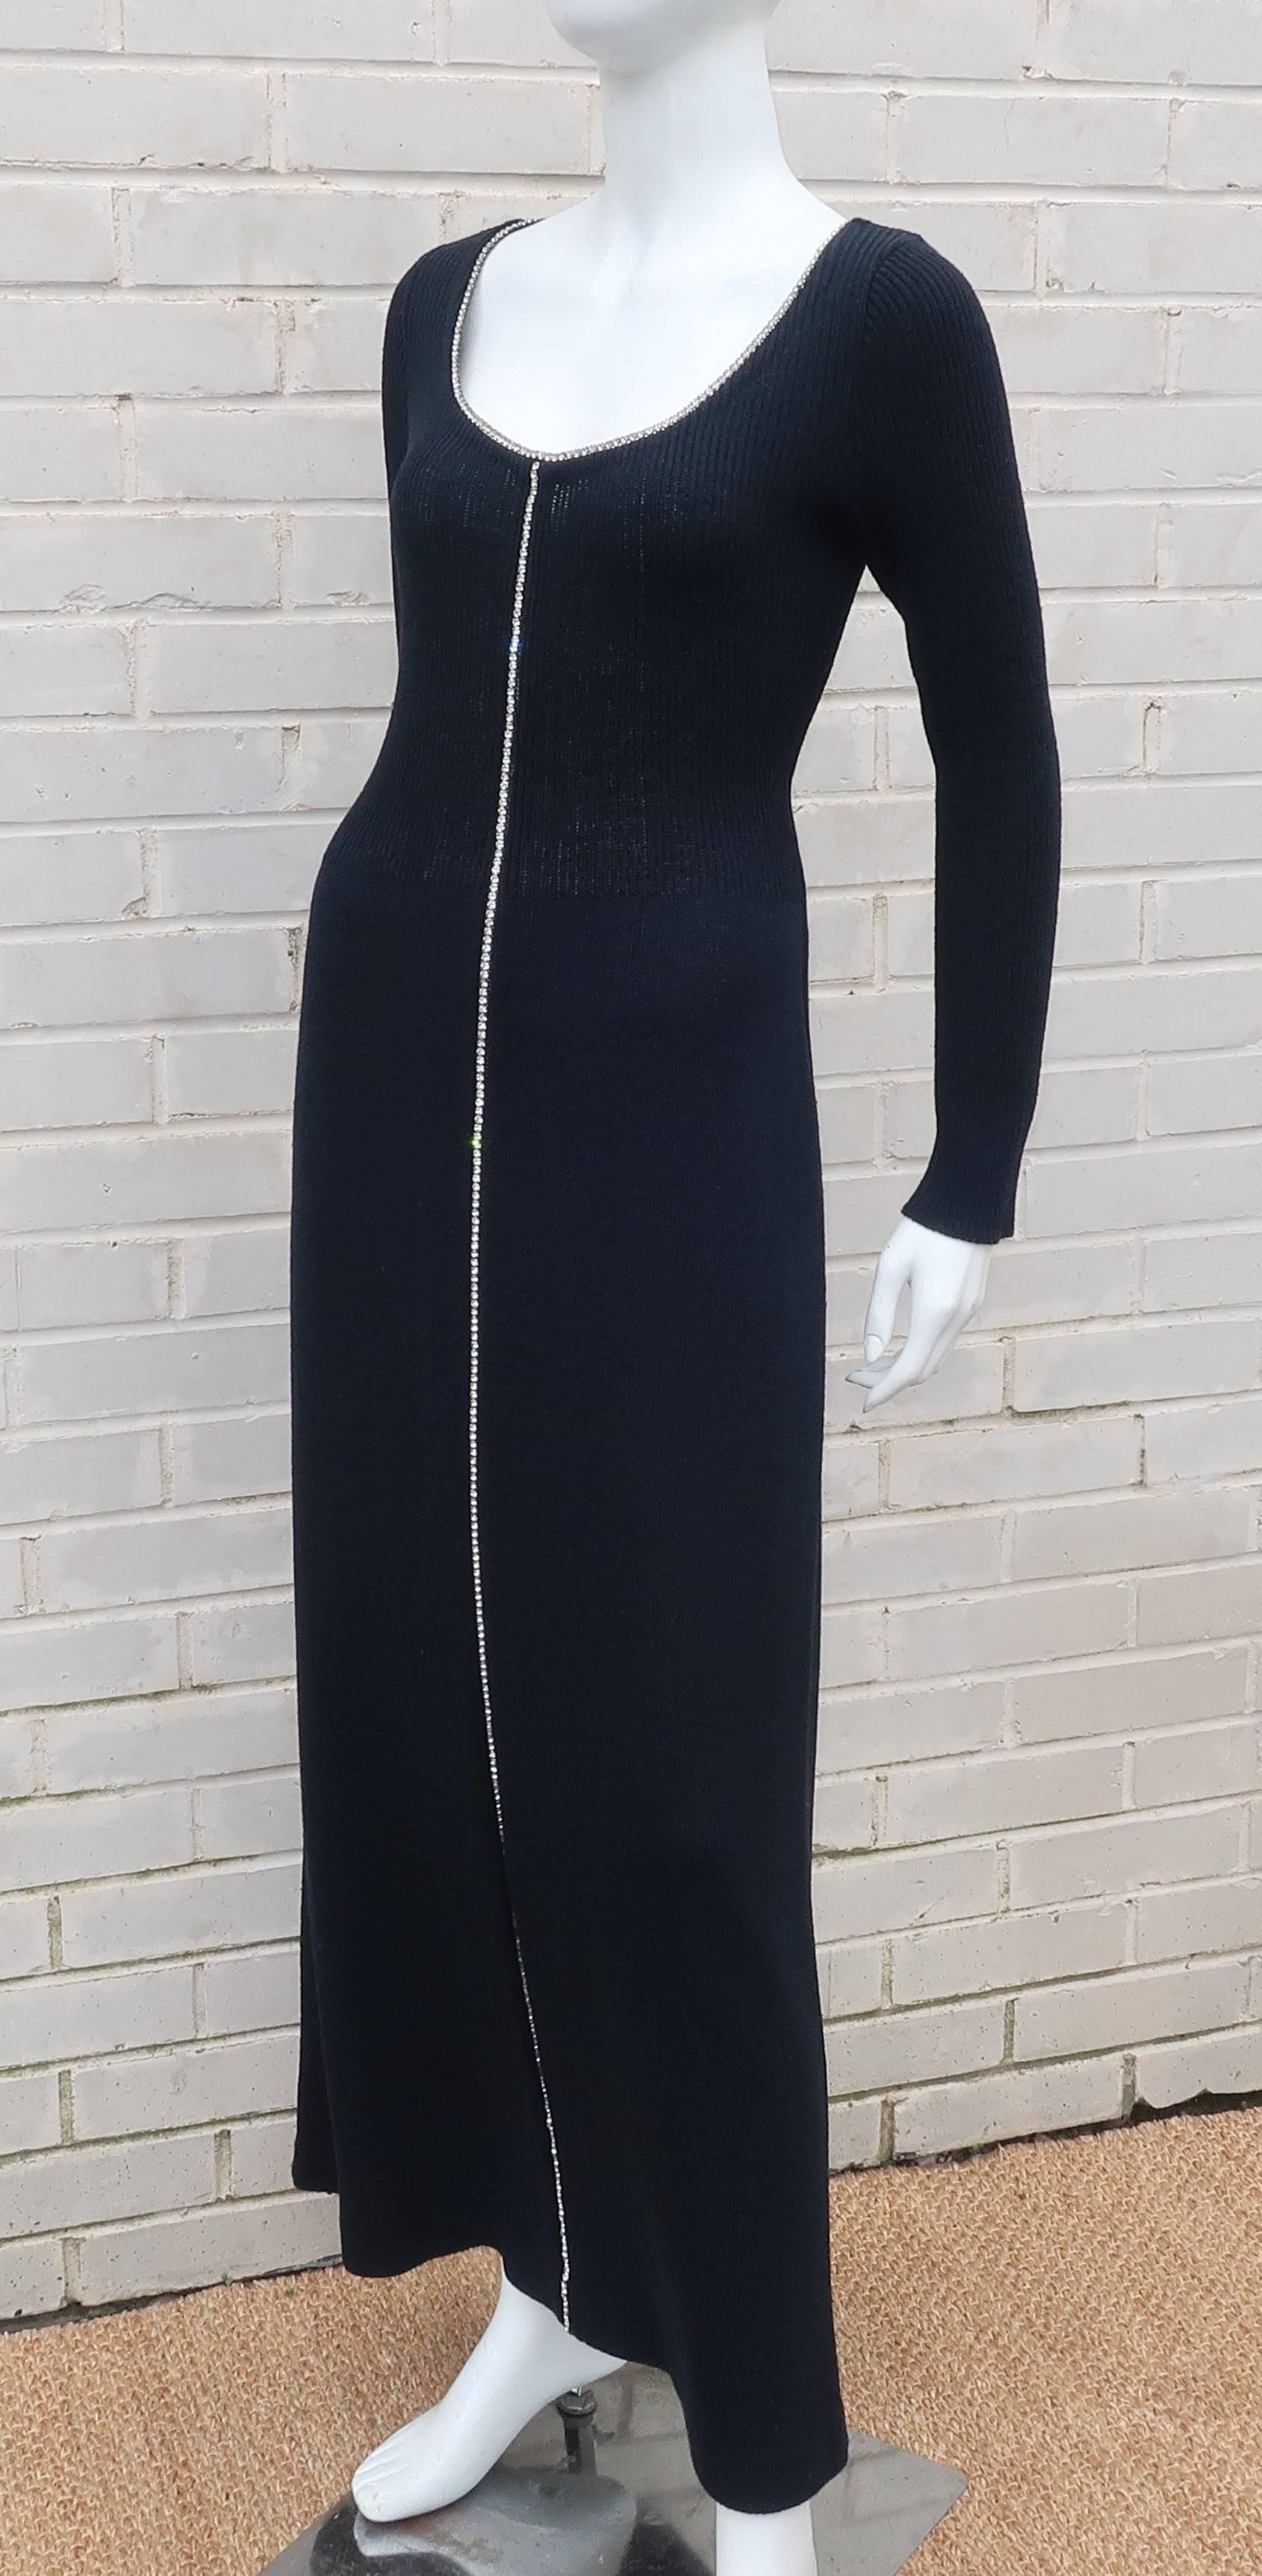 1970’s Silhouette Black Knit Dress With Rhinestones 2